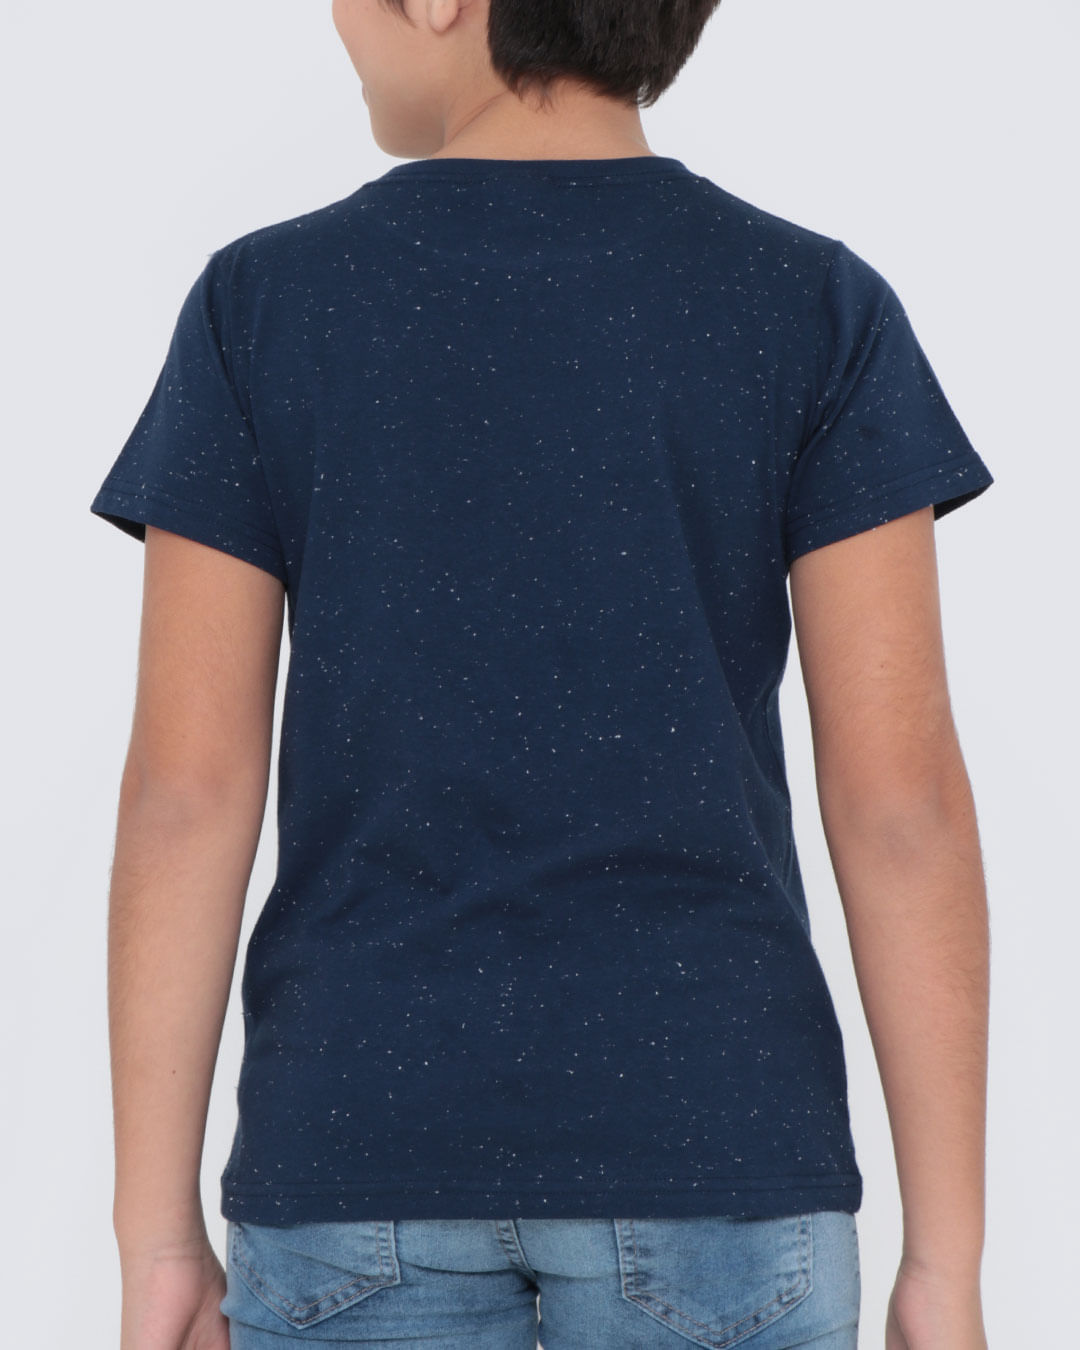 Camiseta-Juvenil-Pernalonga-Looney-Tunes-Azul-Marinho